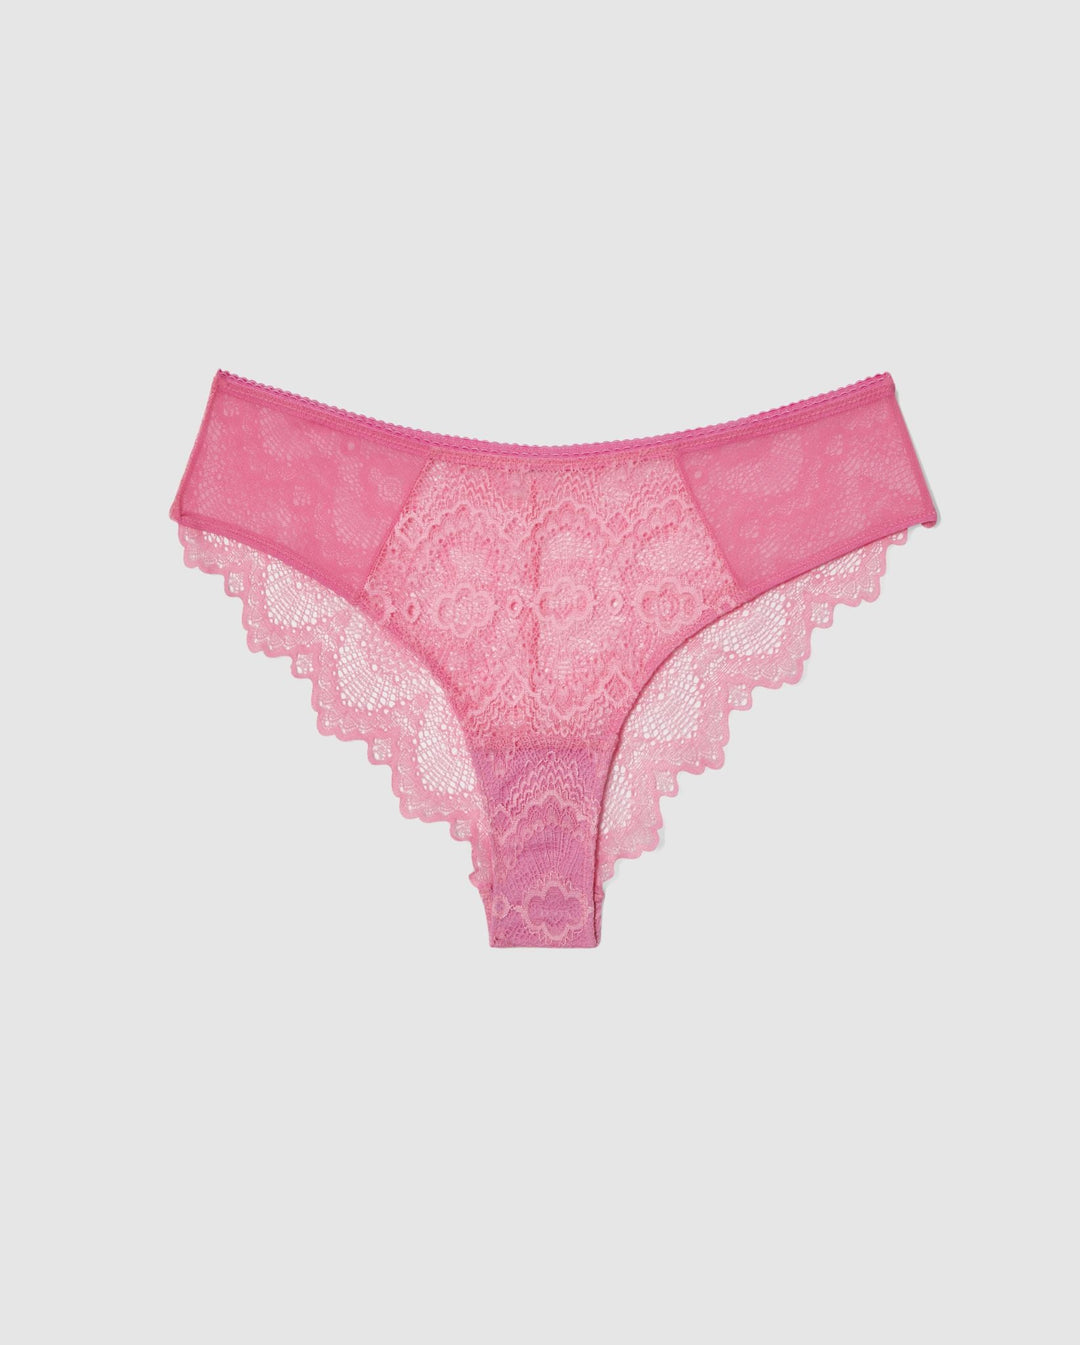 CLZOUD Cheeky Underwear for Women Pink Lace Womens Underwear